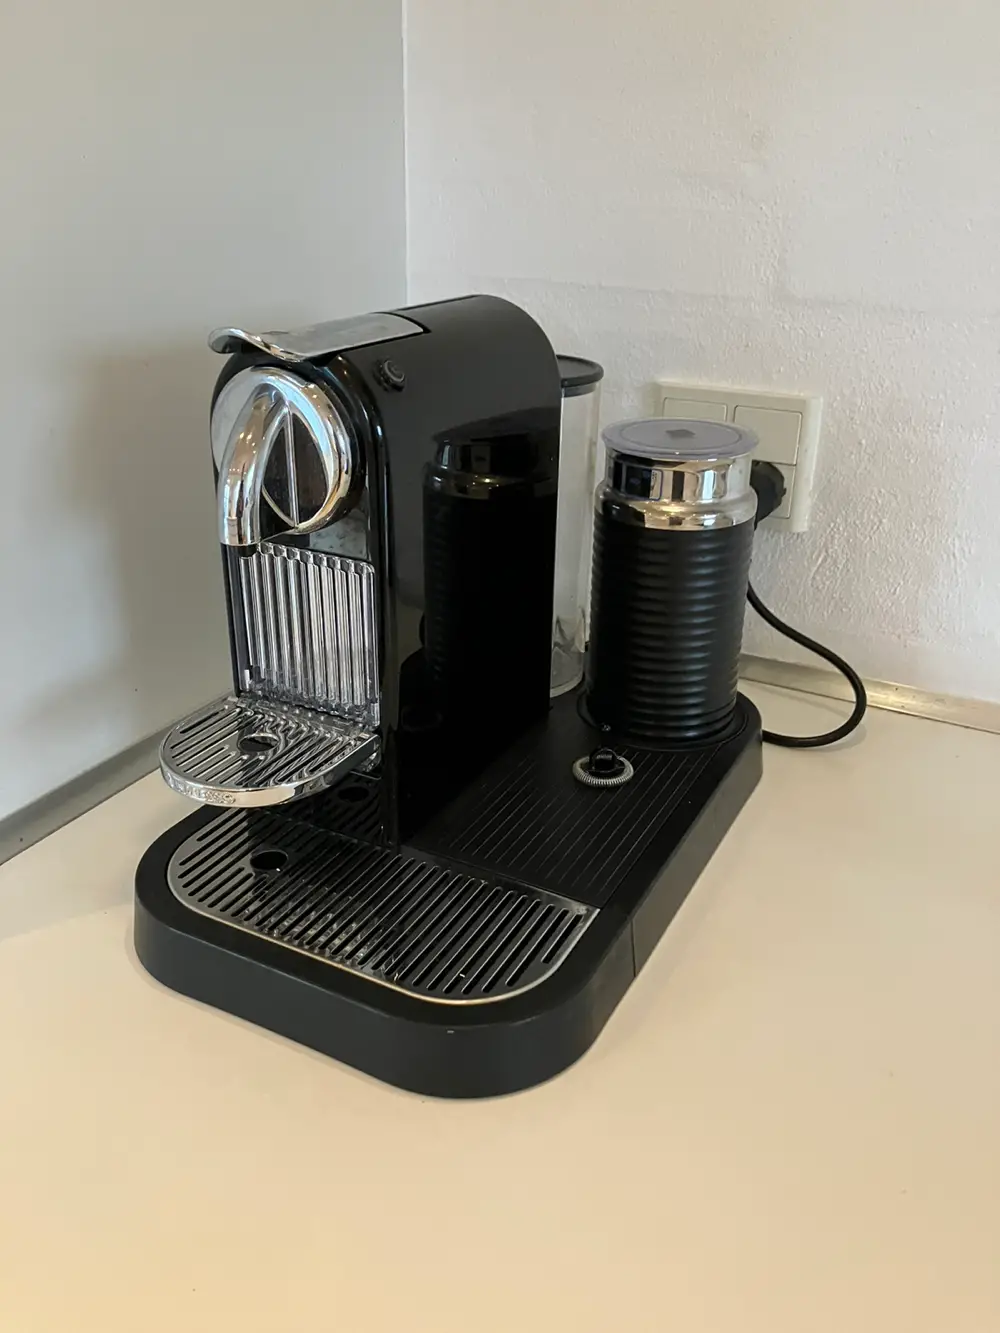 Nespresso Kaffemaskine med mælkeskummer